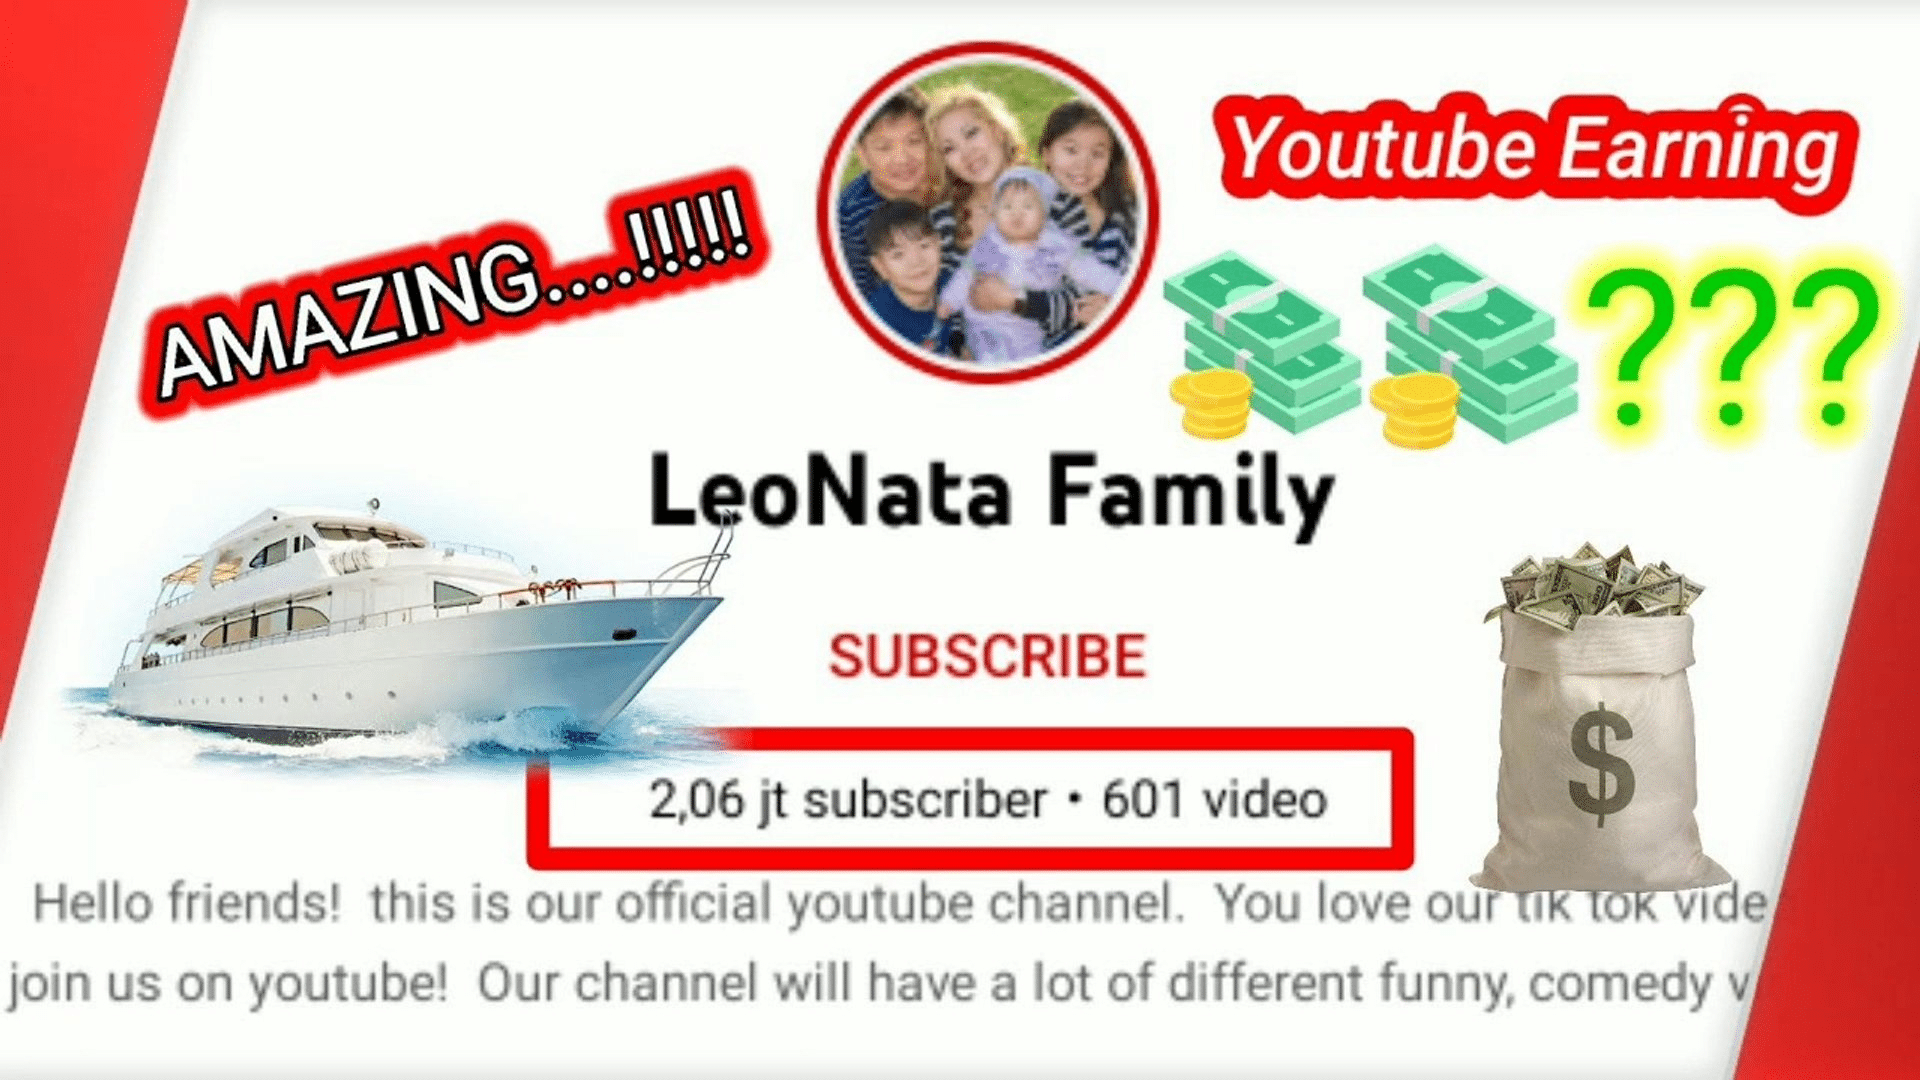 Give good leonata family